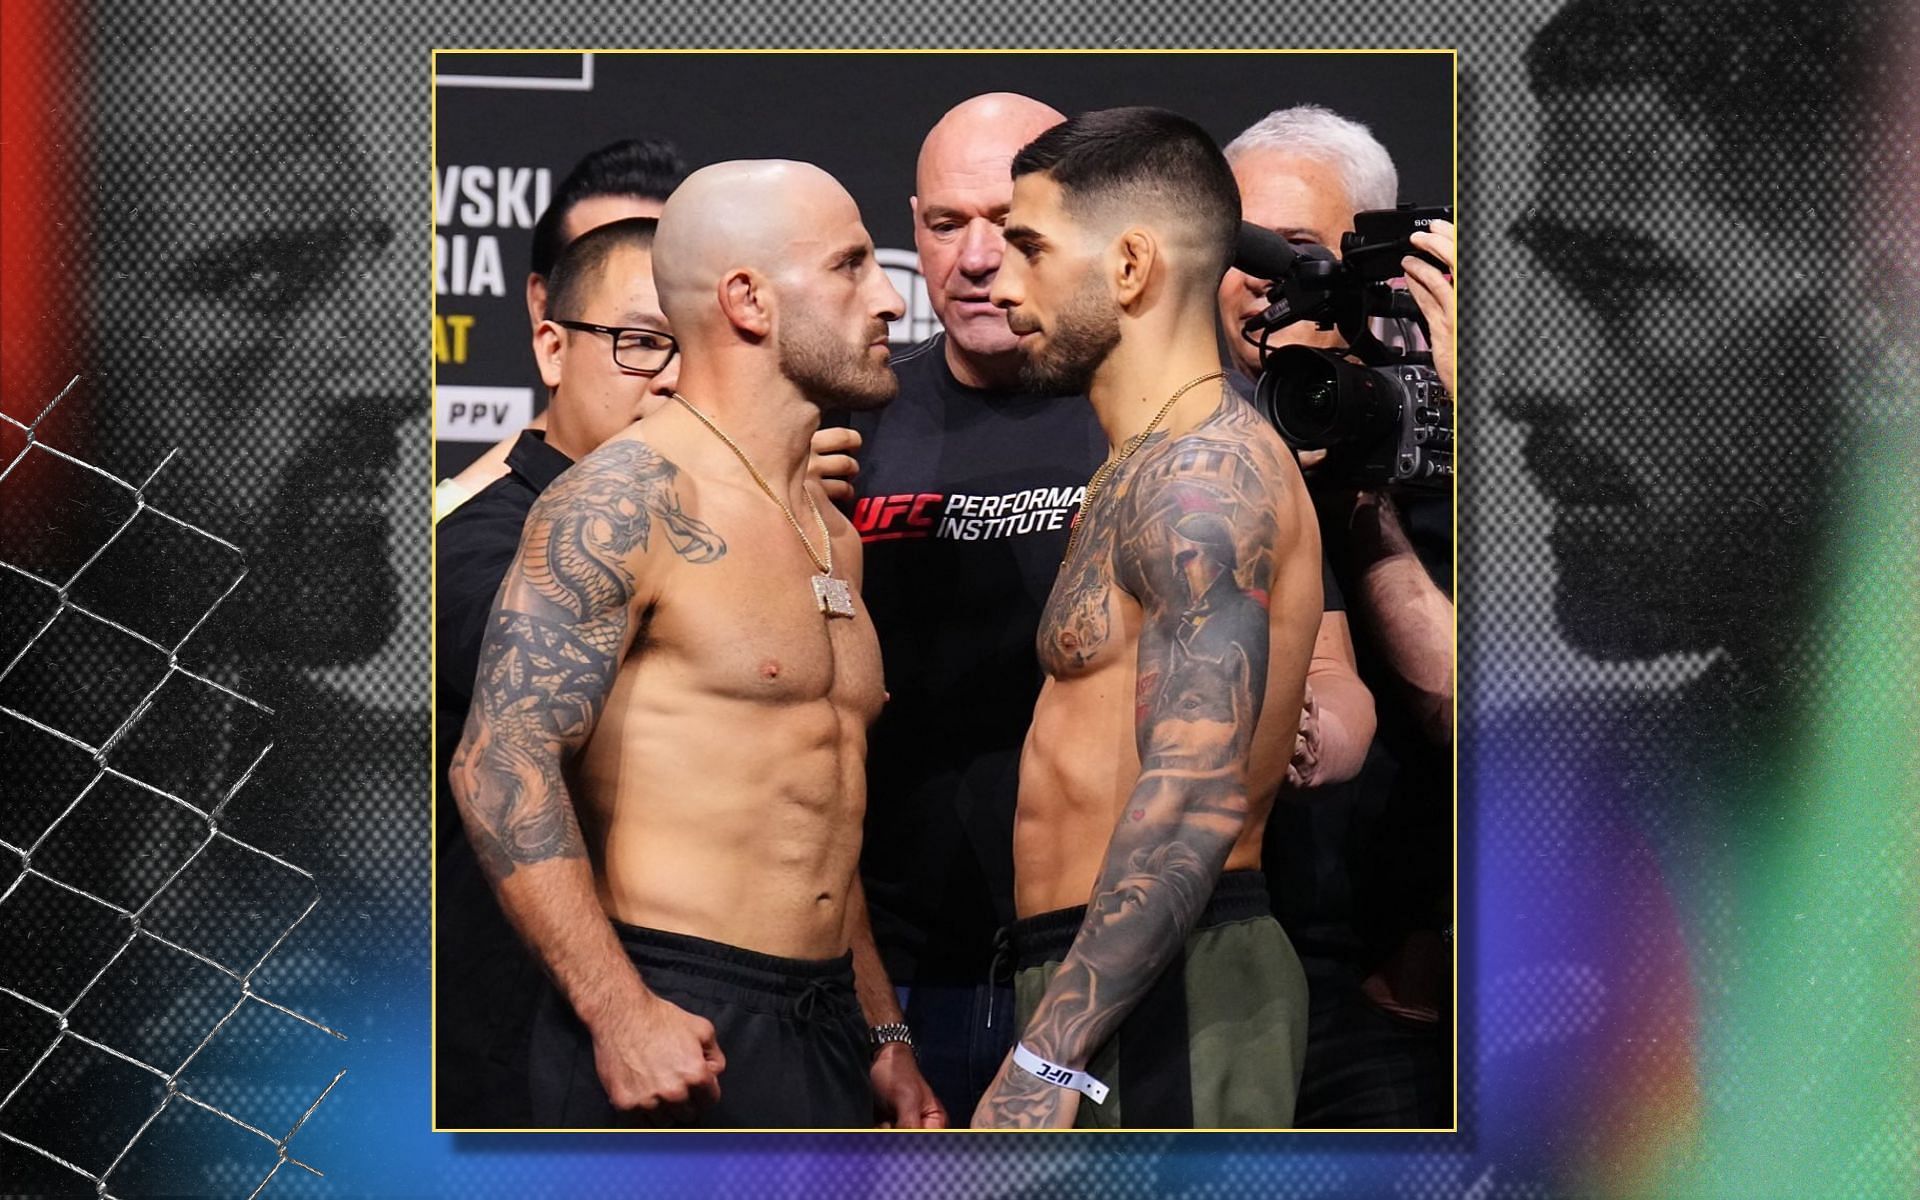 Alexander Volkanovski (left) addresses his opponent Ilia Topuria (right) ahead of UFC 298 clash. {Image credits: @ufc on Instagram]